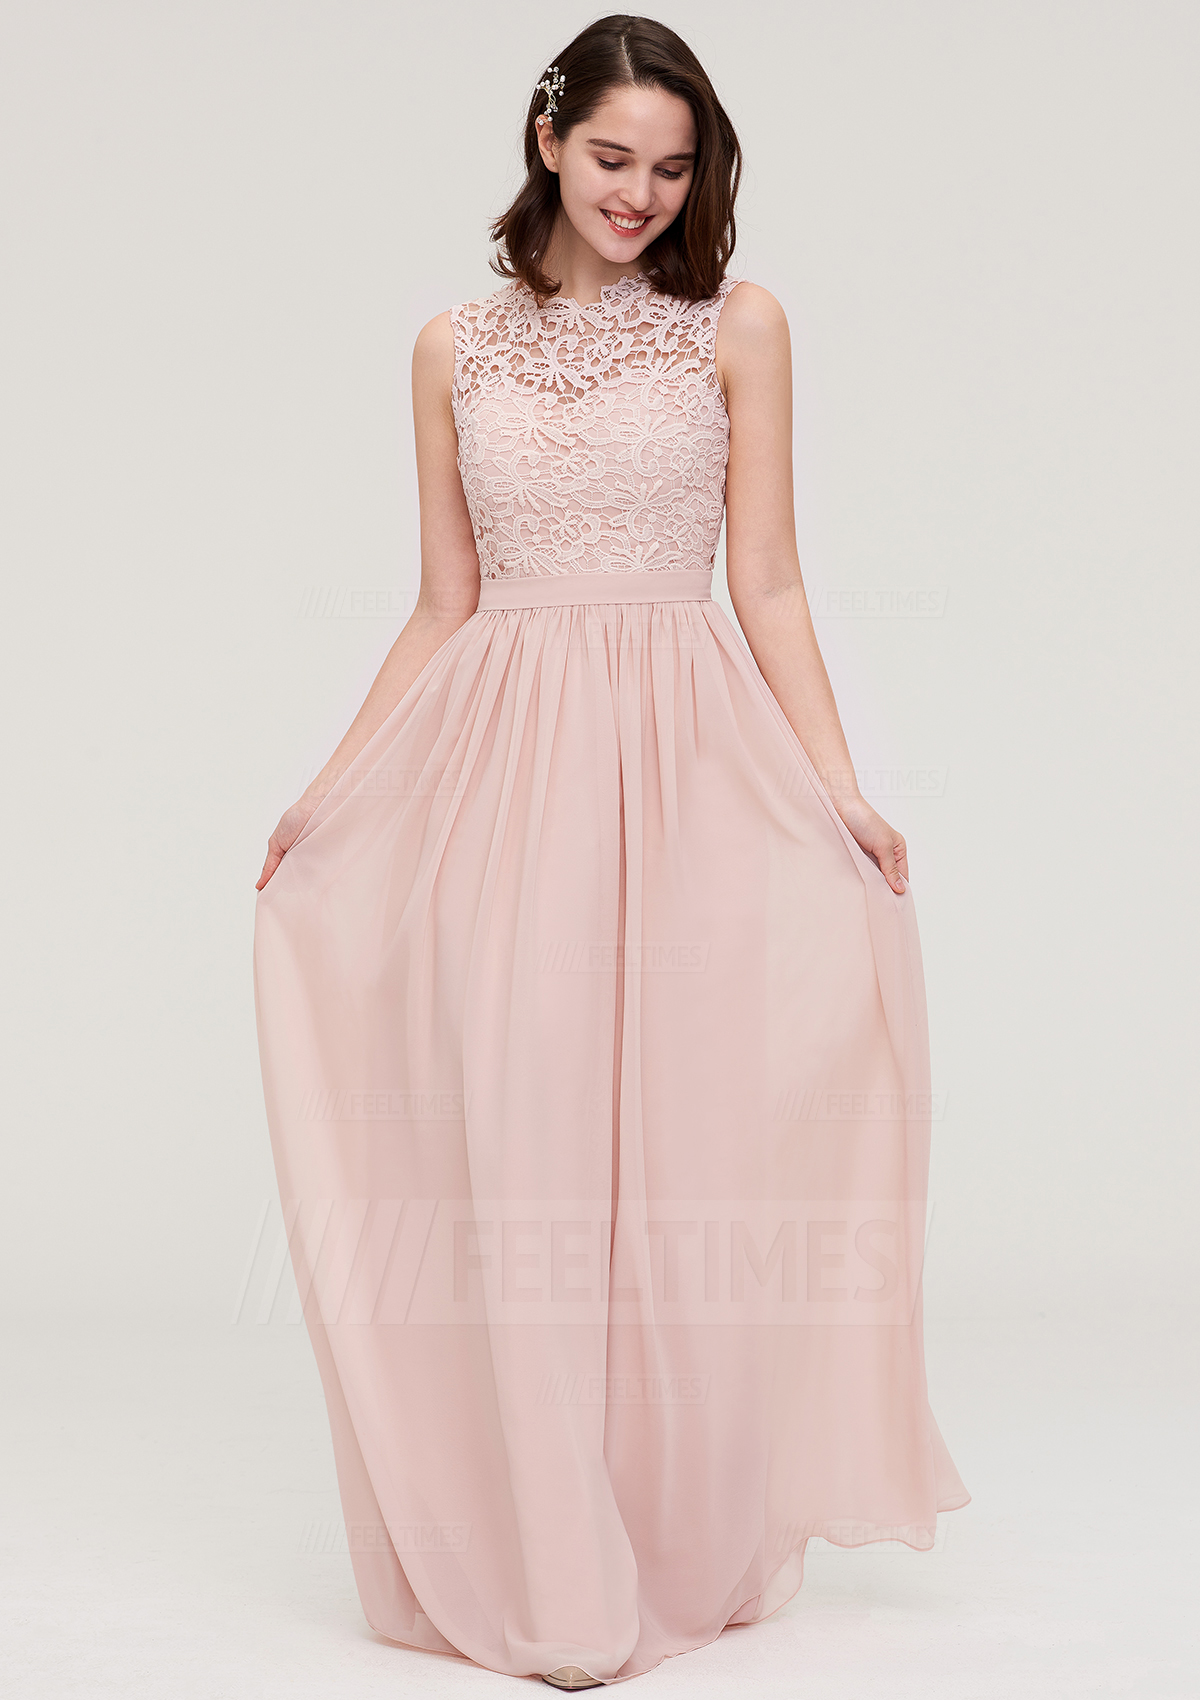 A-Line/Princess Scalloped Neck Sleeveless Long/Floor-Length Chiffon Bridesmaid Dress With Lace
